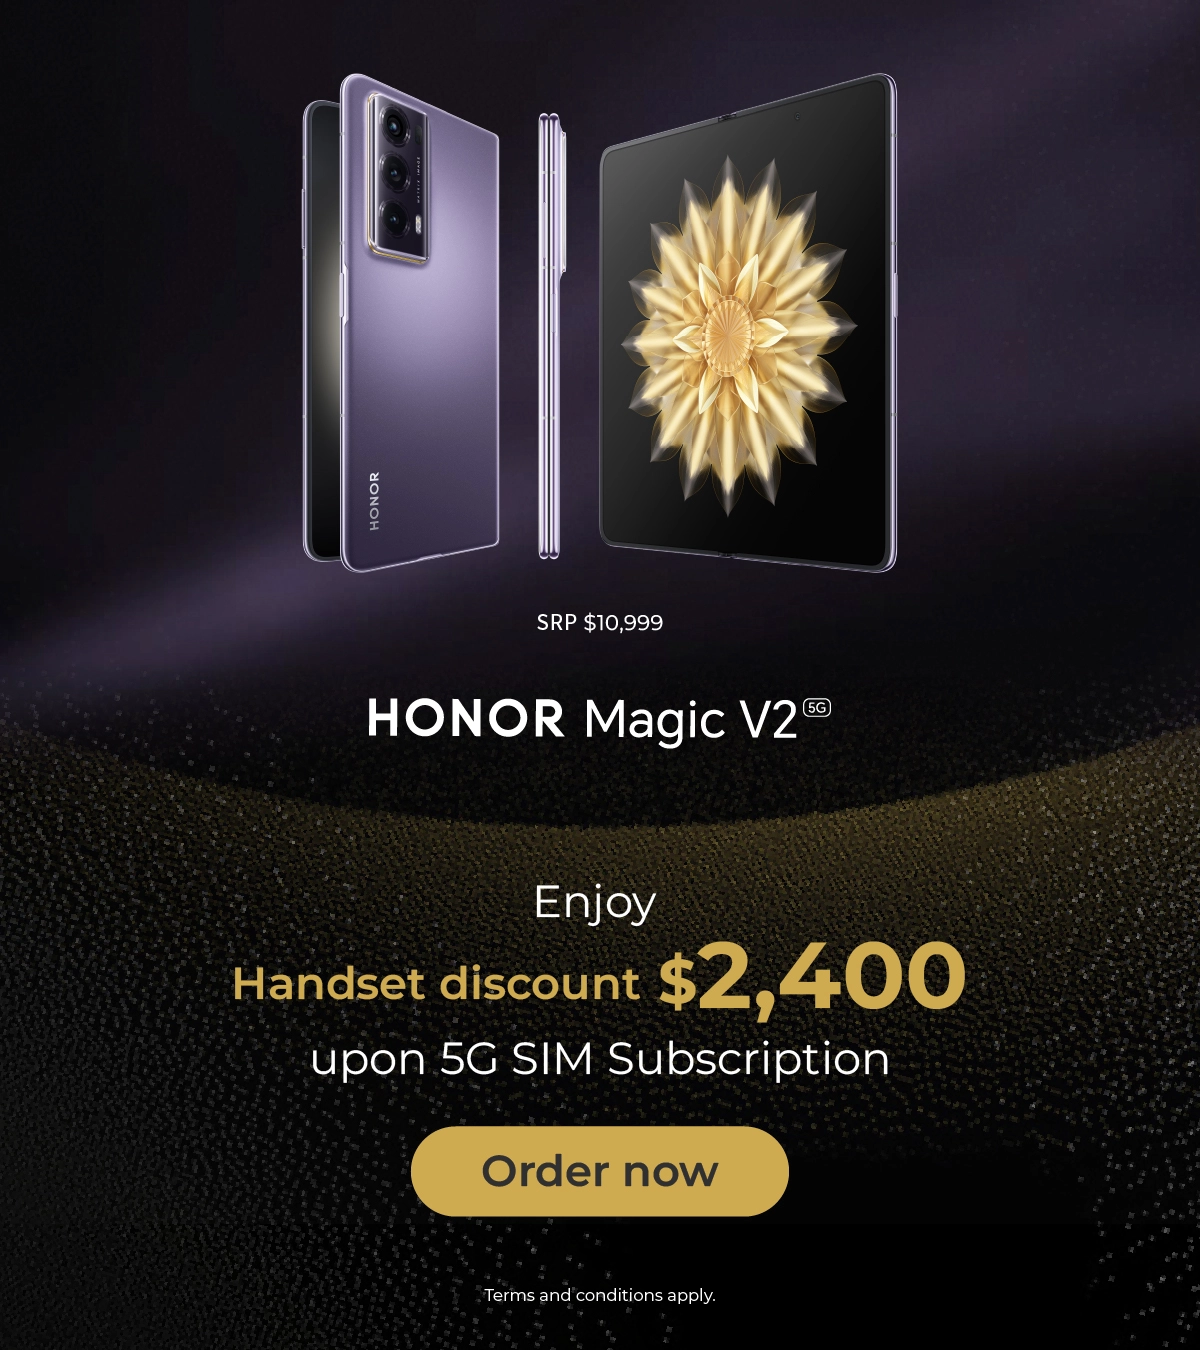 Pre-order to enjoy Handset discount + Premium Privileges Over $7,700 value upon 5G SIM Subscription